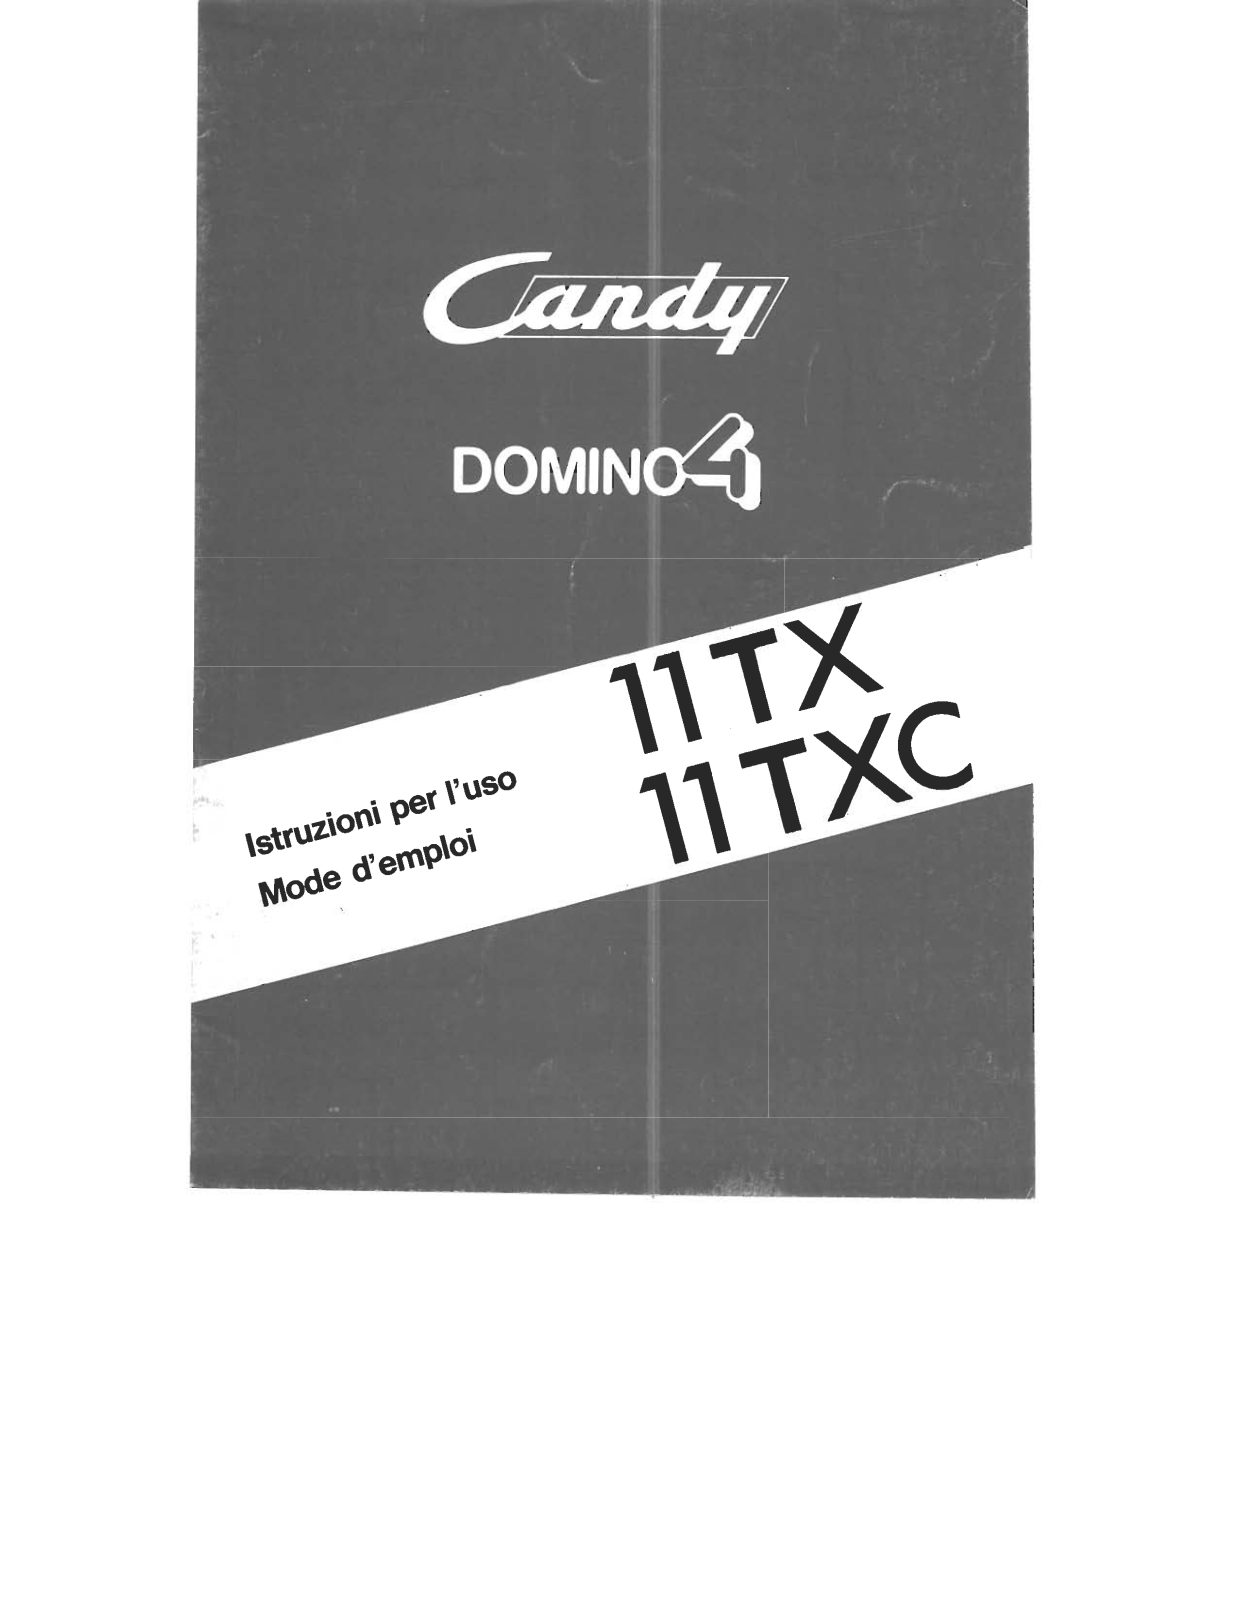 Candy 11TCX, 11TX User Manual